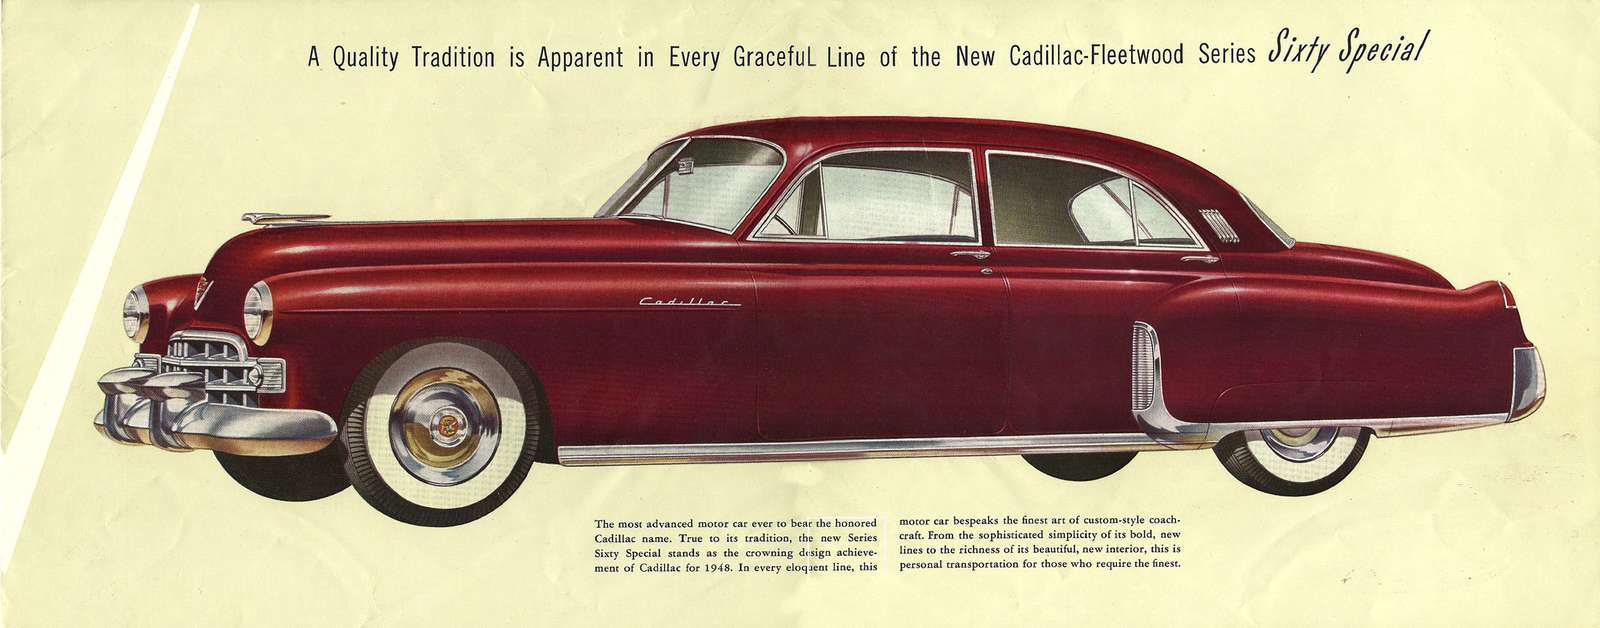 Cadillac vermelho gjhyyop puzzle online a partir de fotografia